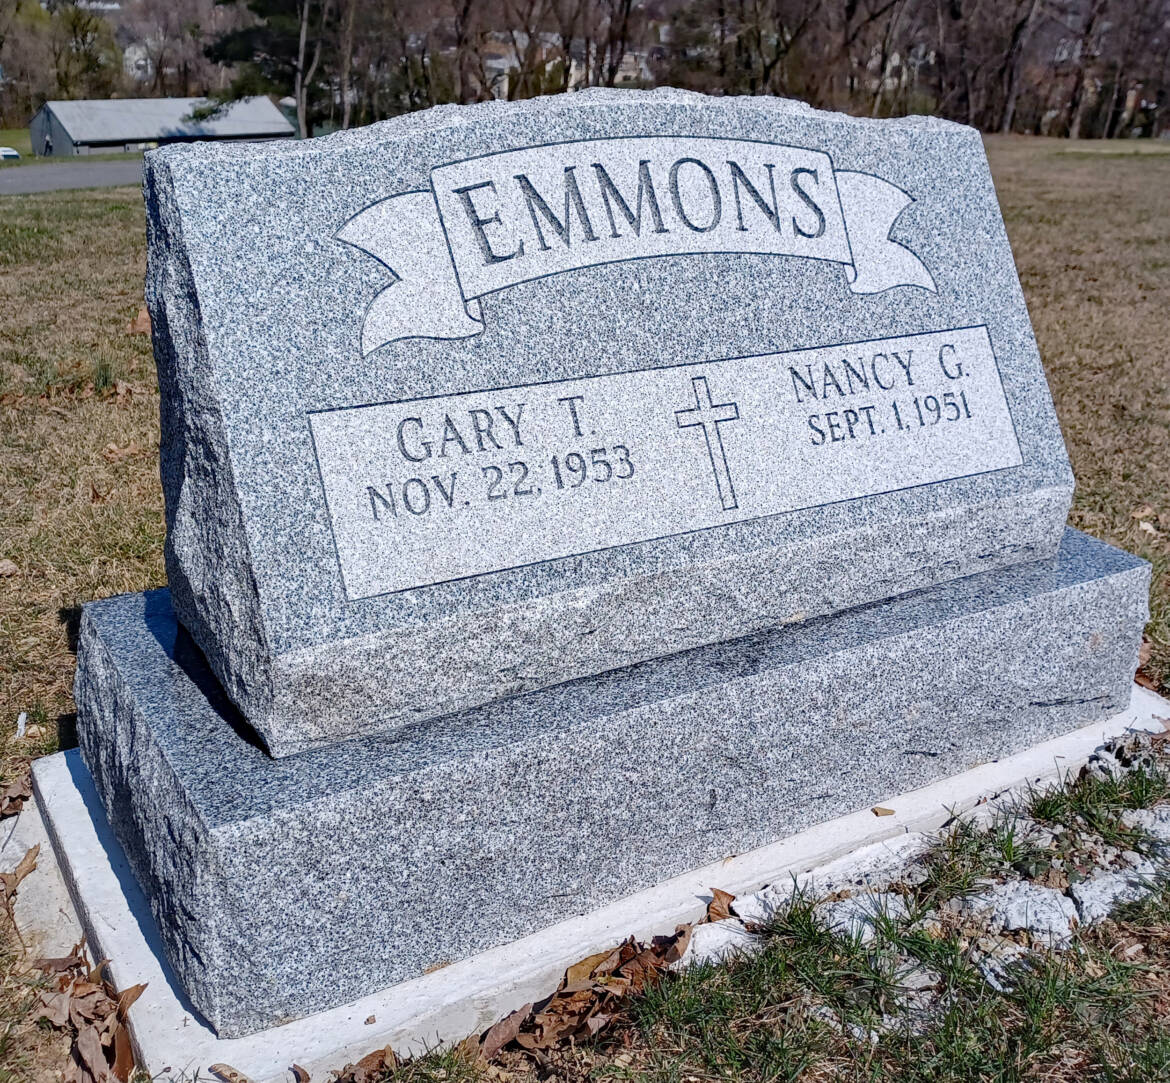 Emmons-Gary-Nancy.jpg